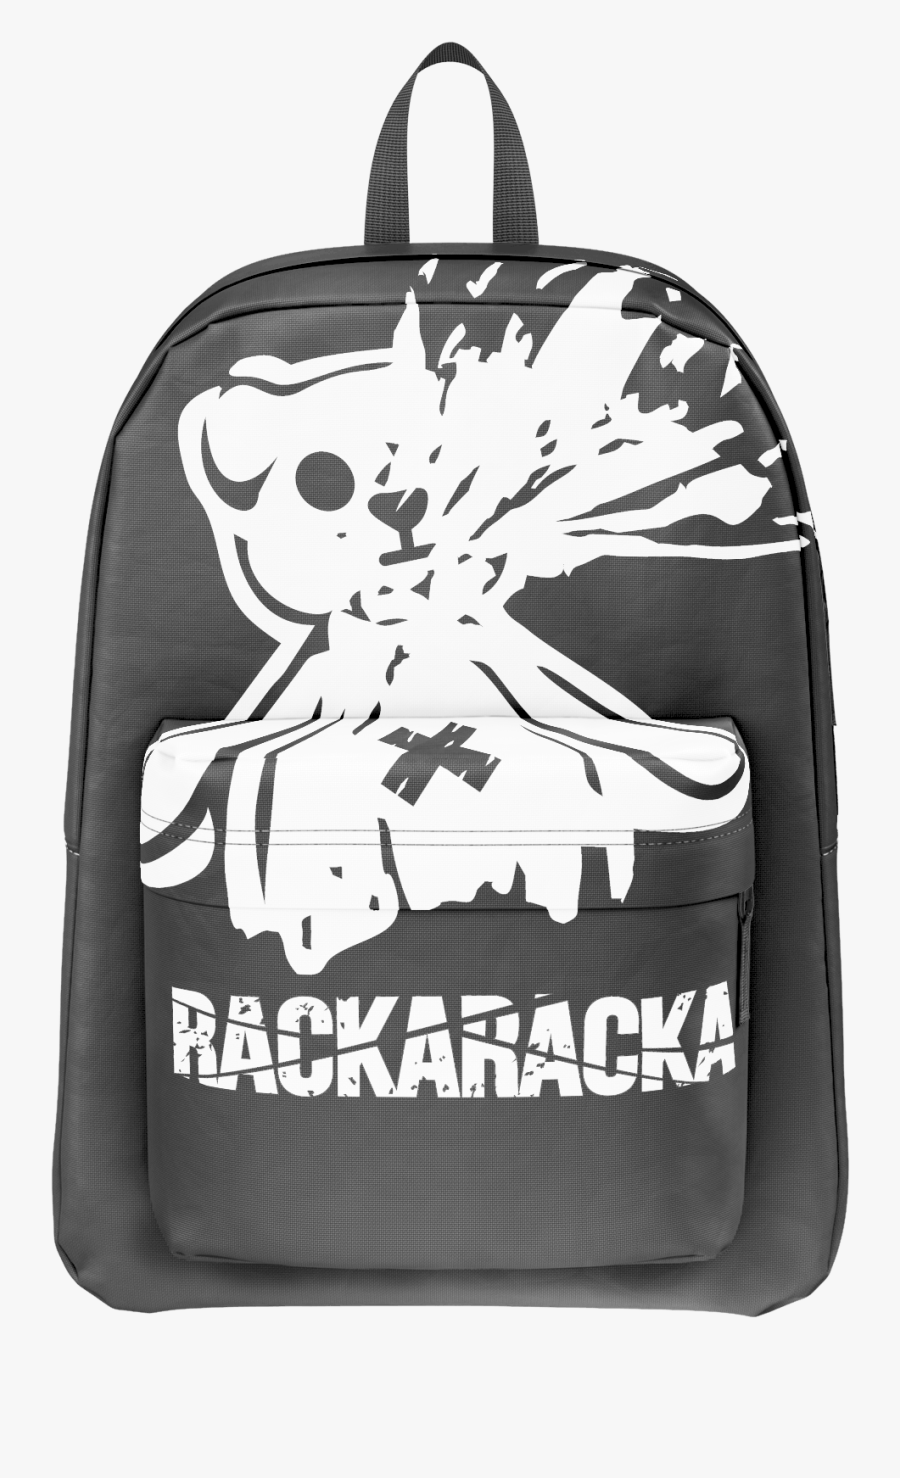 Rackaracka Black Backpack - Rackaracka Logo, Transparent Clipart